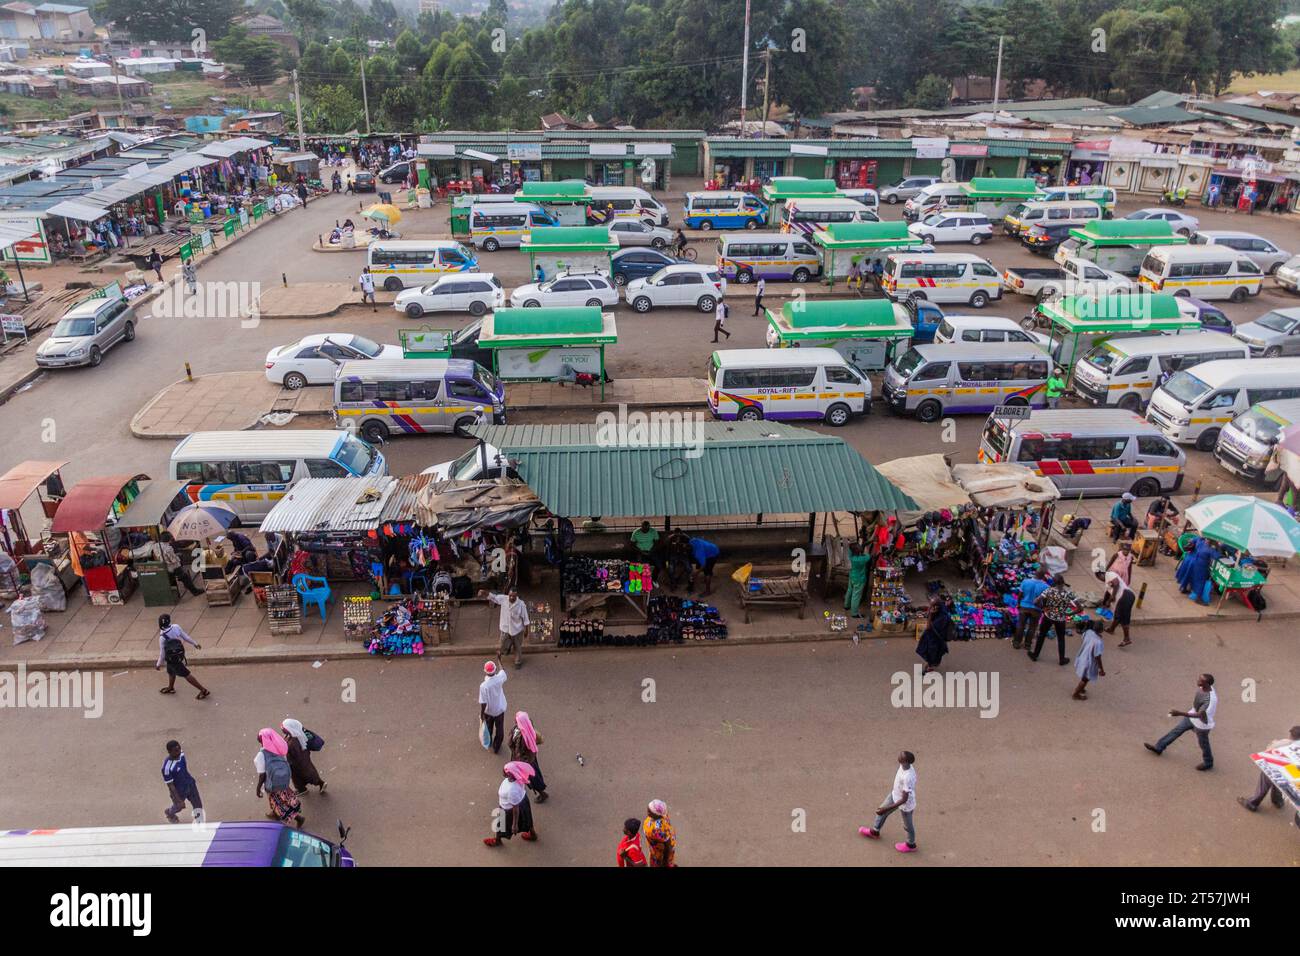 KAKAMEGA, KENYA - FEBRUARY 22, 2020: Aerial view of matatu (minibus) stand in Kakamega, Kenya Stock Photo